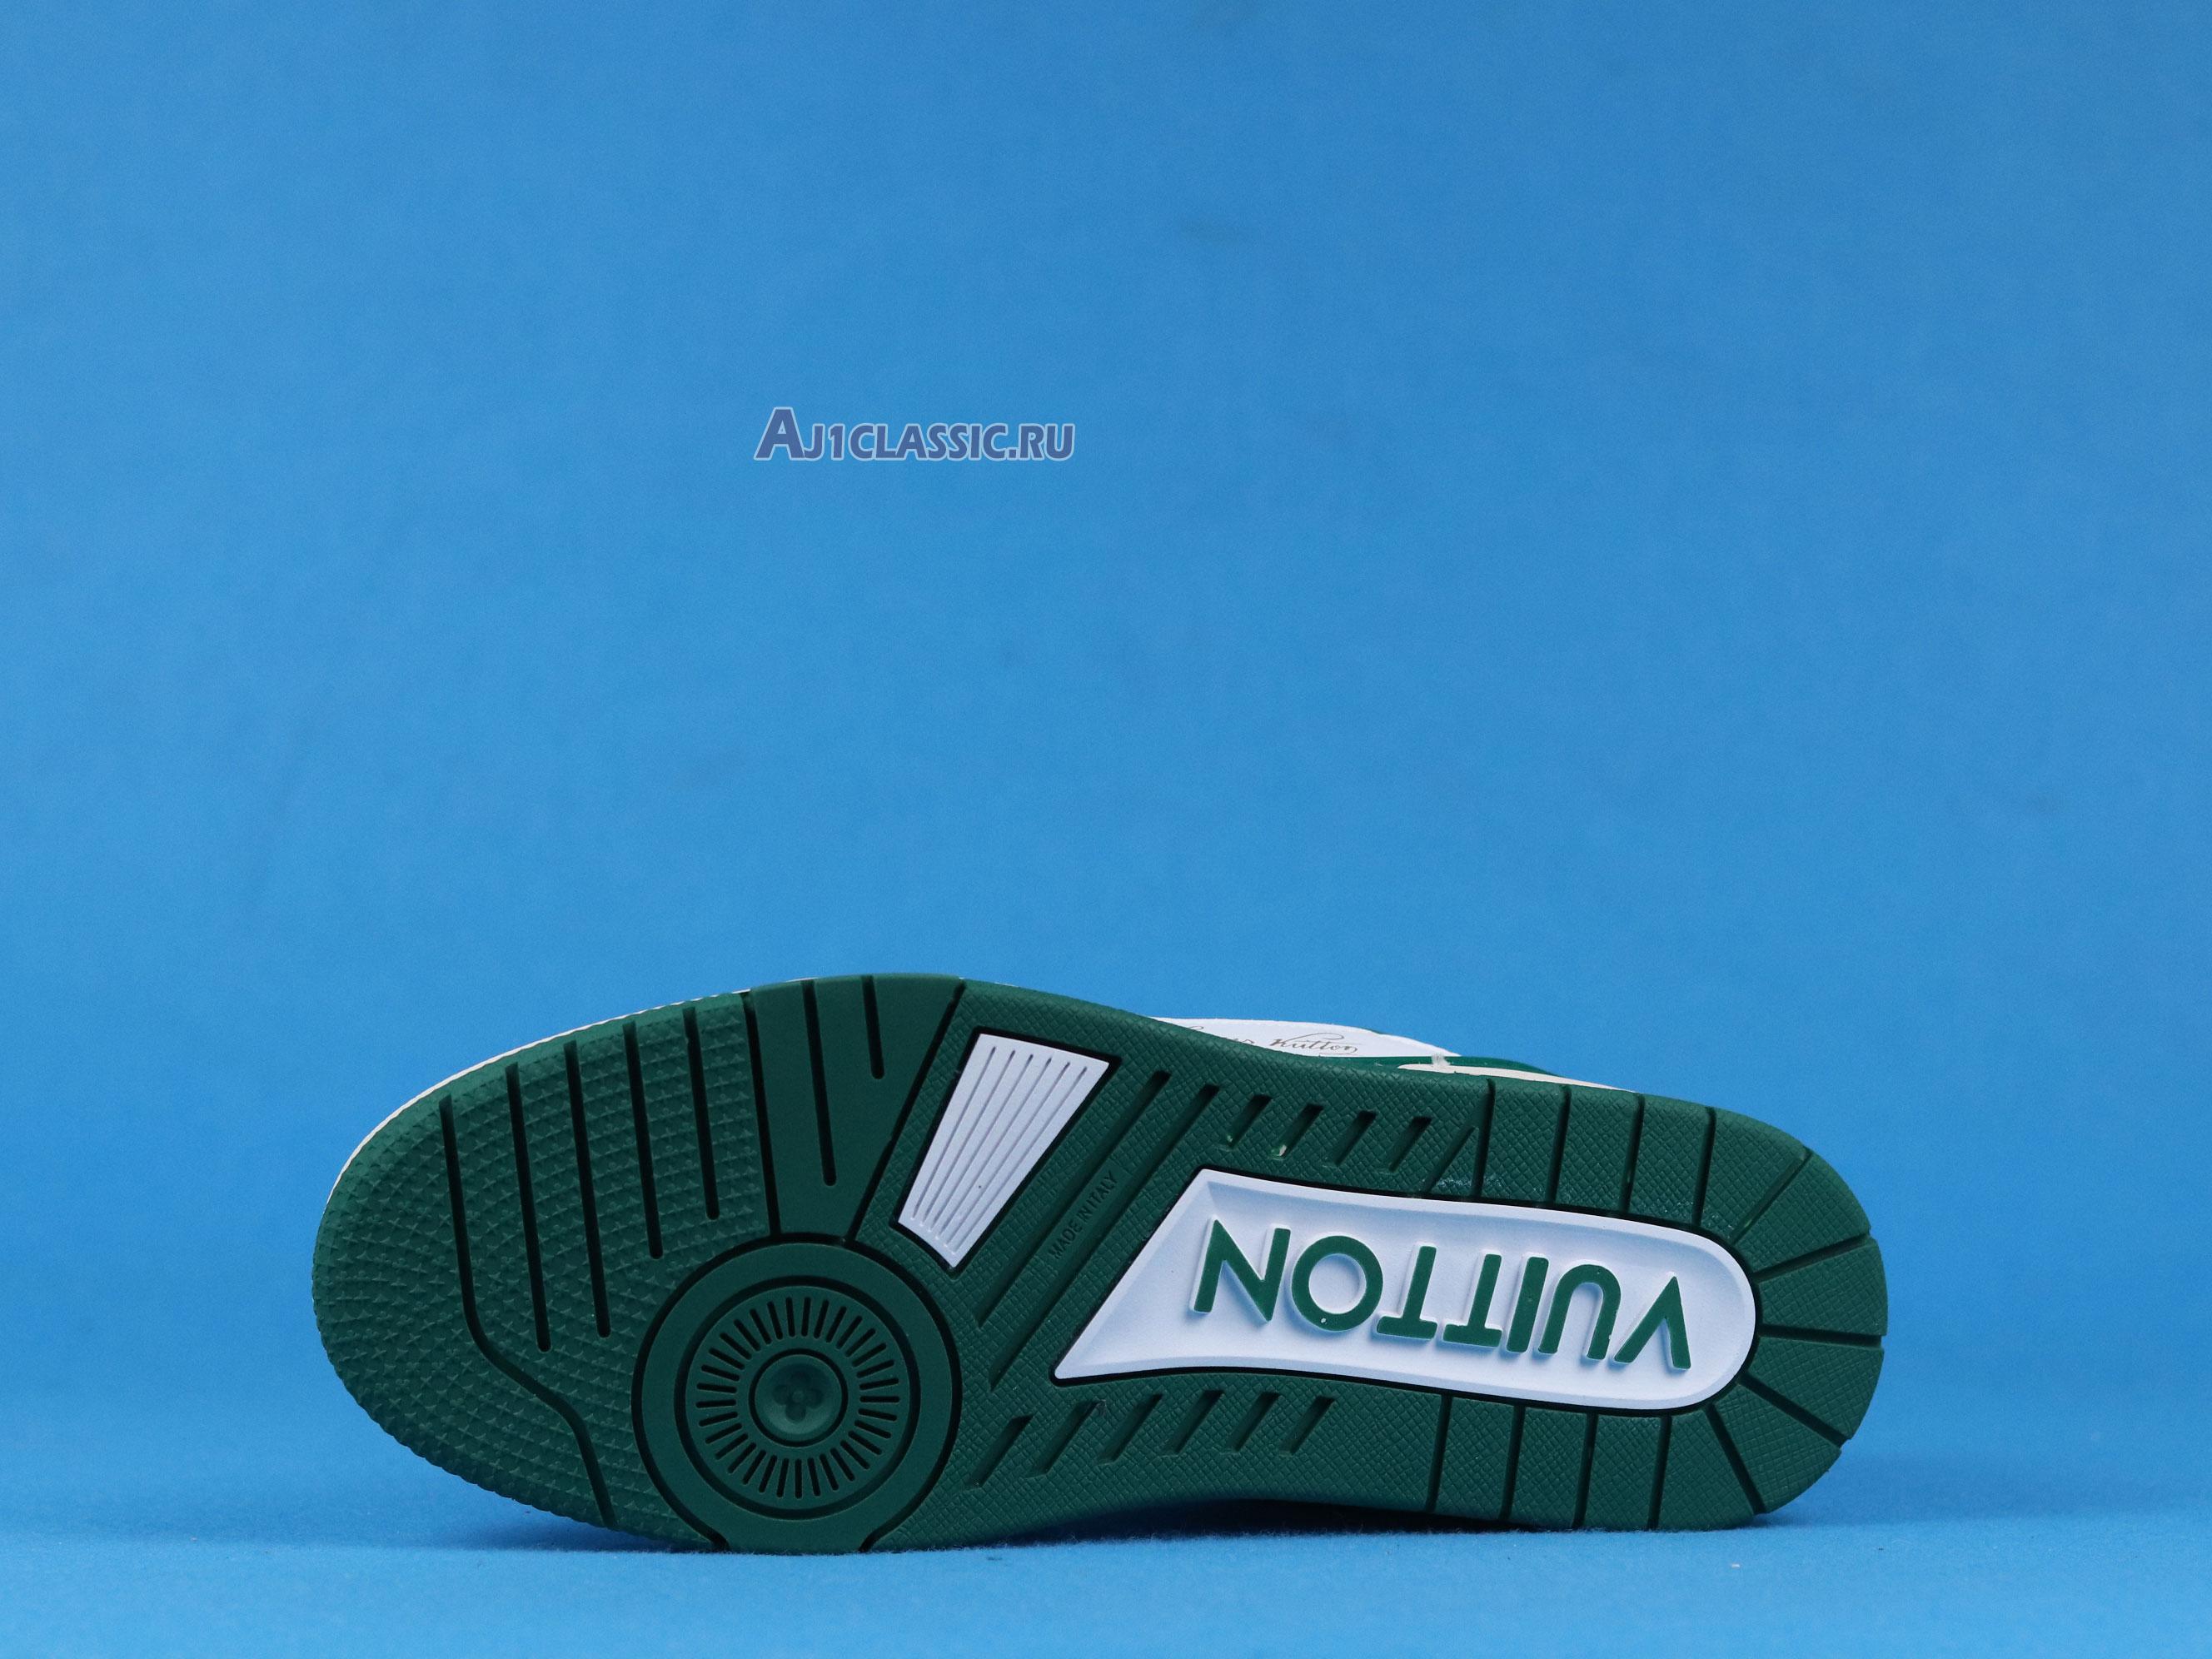 Louis Vuitton LV Trainer Sneaker Low "White Green" A54HS